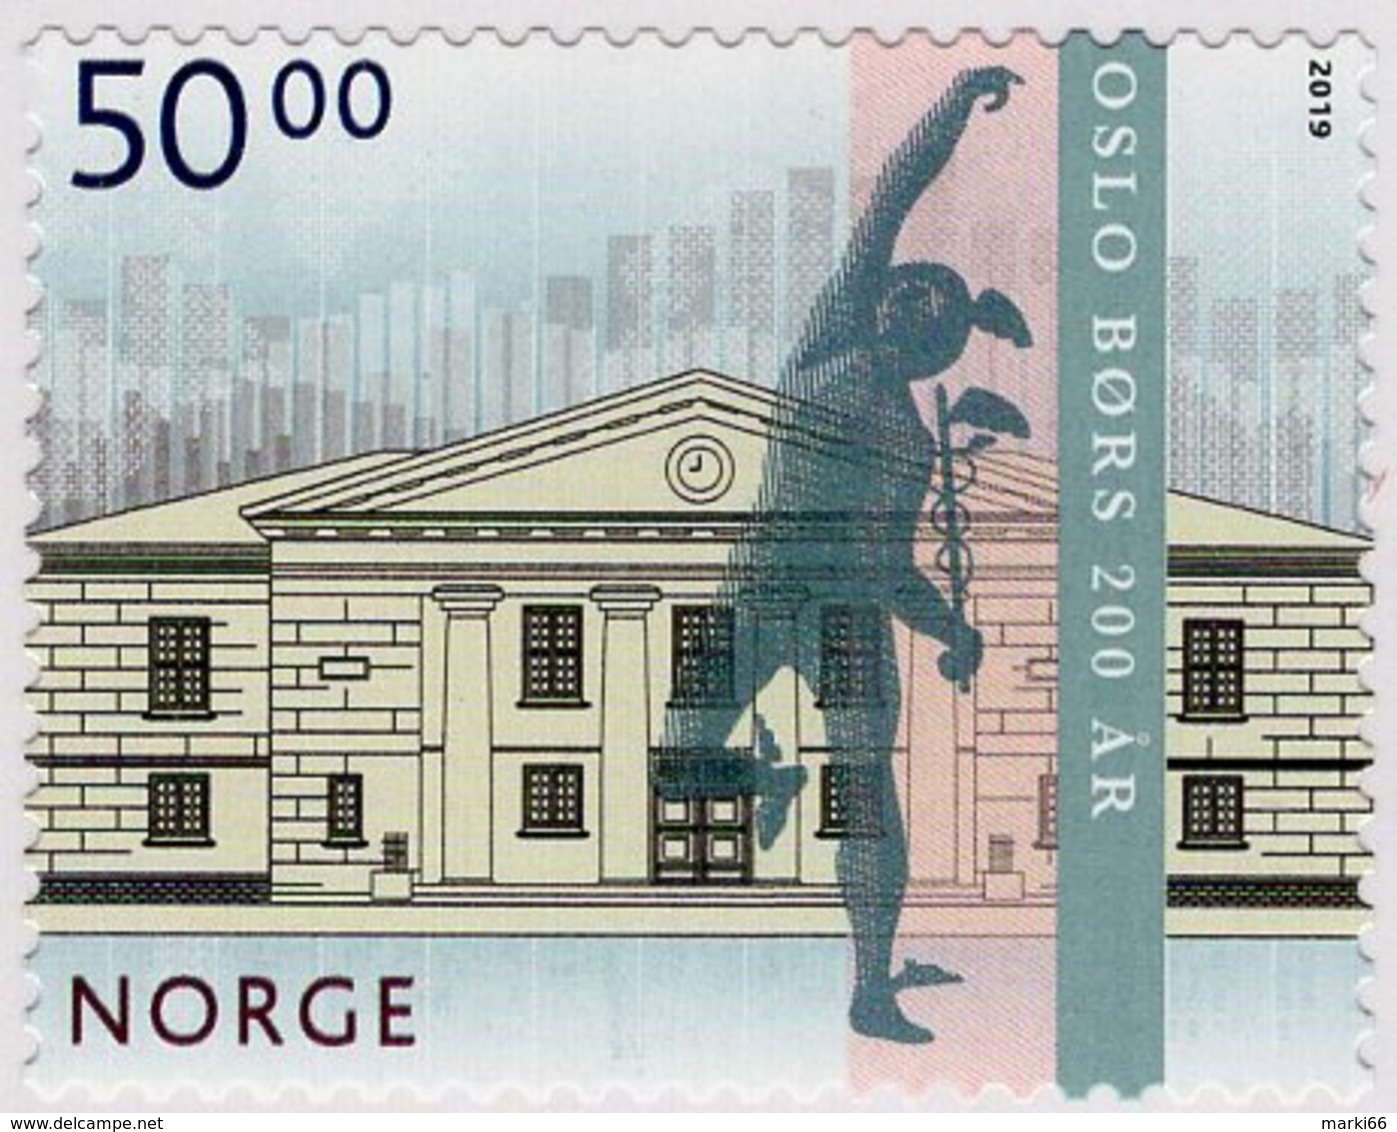 Norway - 2019 - Oslo Stock Exchange Bicentenary - Mint Self-adhesive Stamp - Ongebruikt